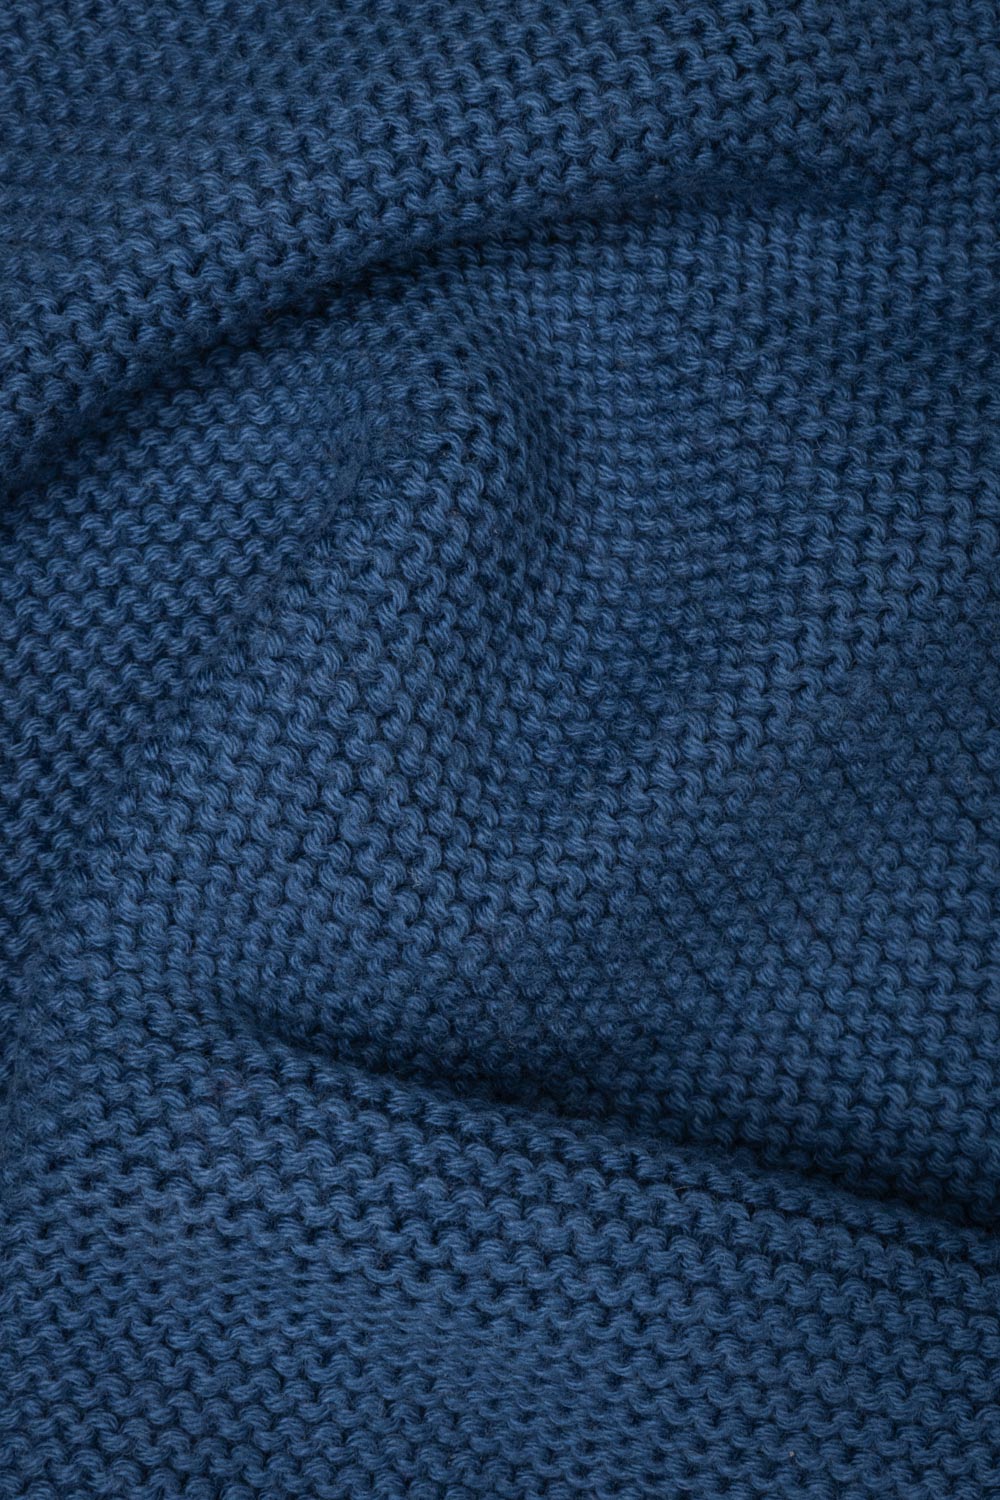 Dishcloth in Tan & Blue - Set of 2